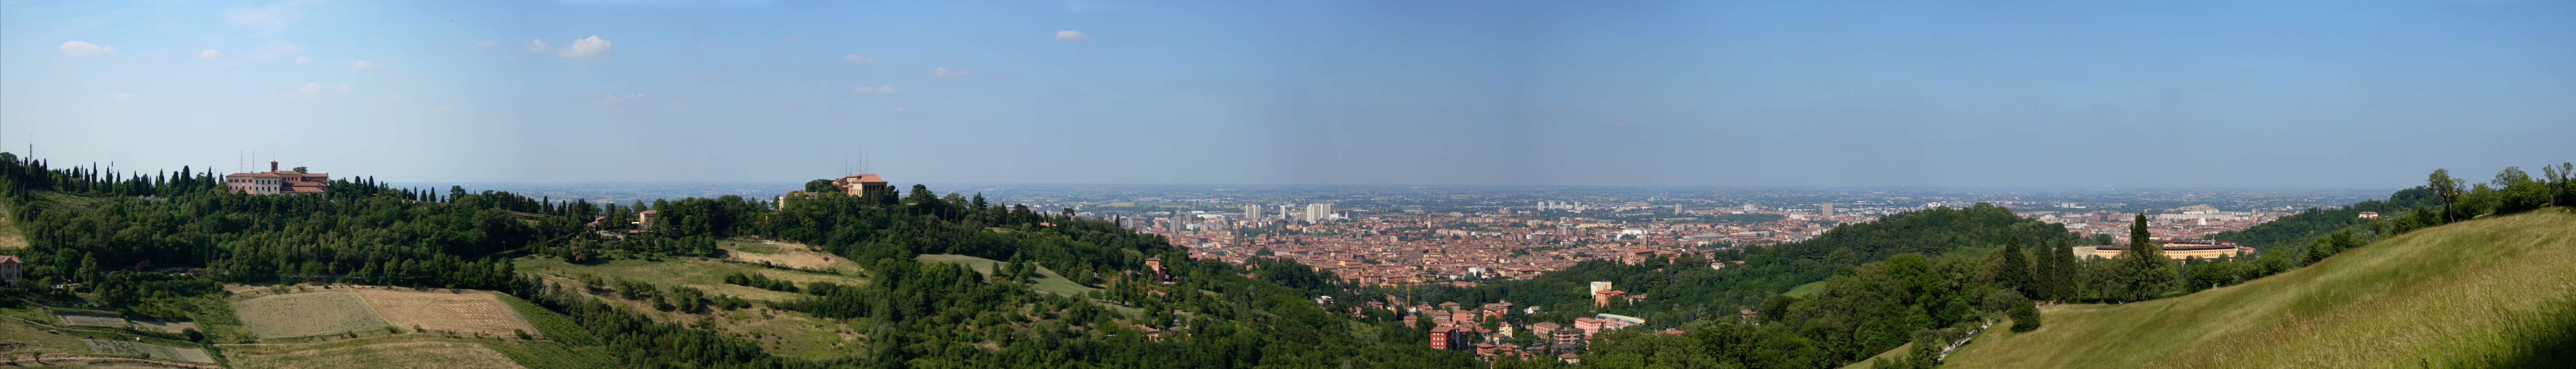 Bologna's Panoramic view from Villa Ghigi - Chiara Casalone